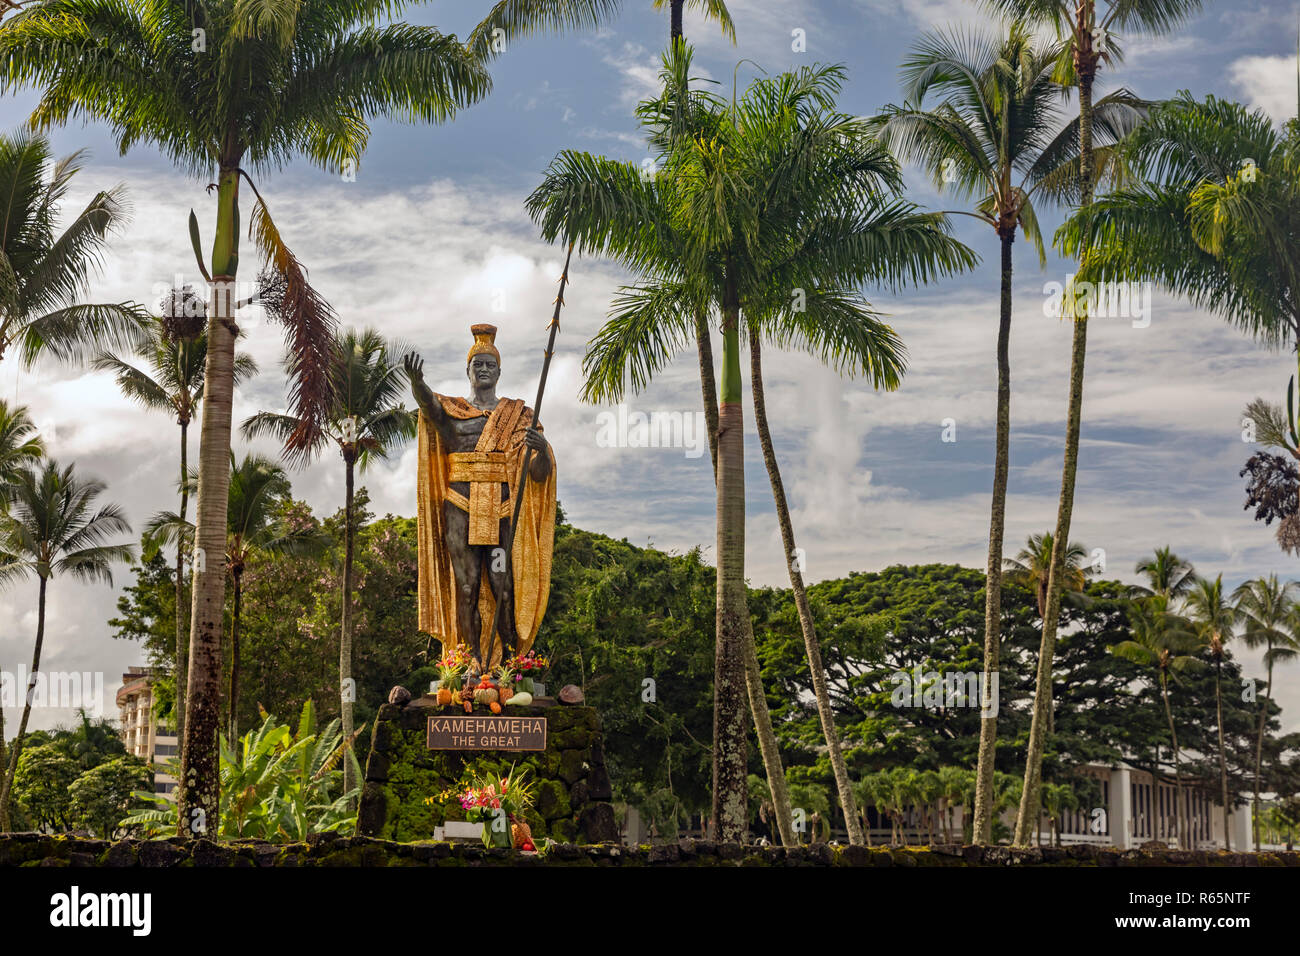 Hilo, Hawaii - A statue of Kamehameha the Great in Wailoa River State Park. Kamehameha unified the Hawaiian islands into the Kingdom of Hawaii in 1810 Stock Photo